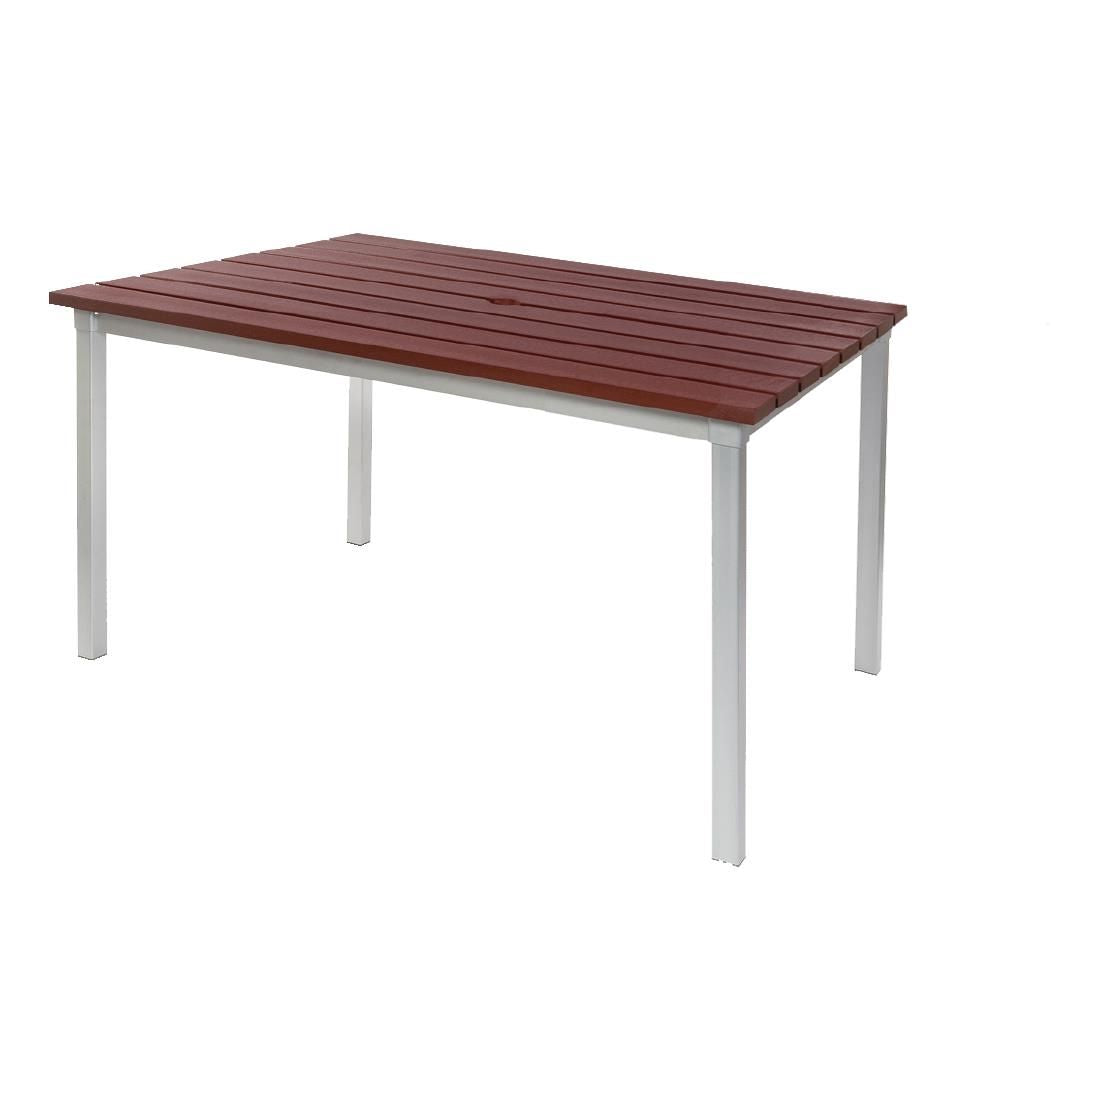 GoPak Enviro Outdoor Walnut Effect Faux Wood Table 1250mm JD Catering Equipment Solutions Ltd